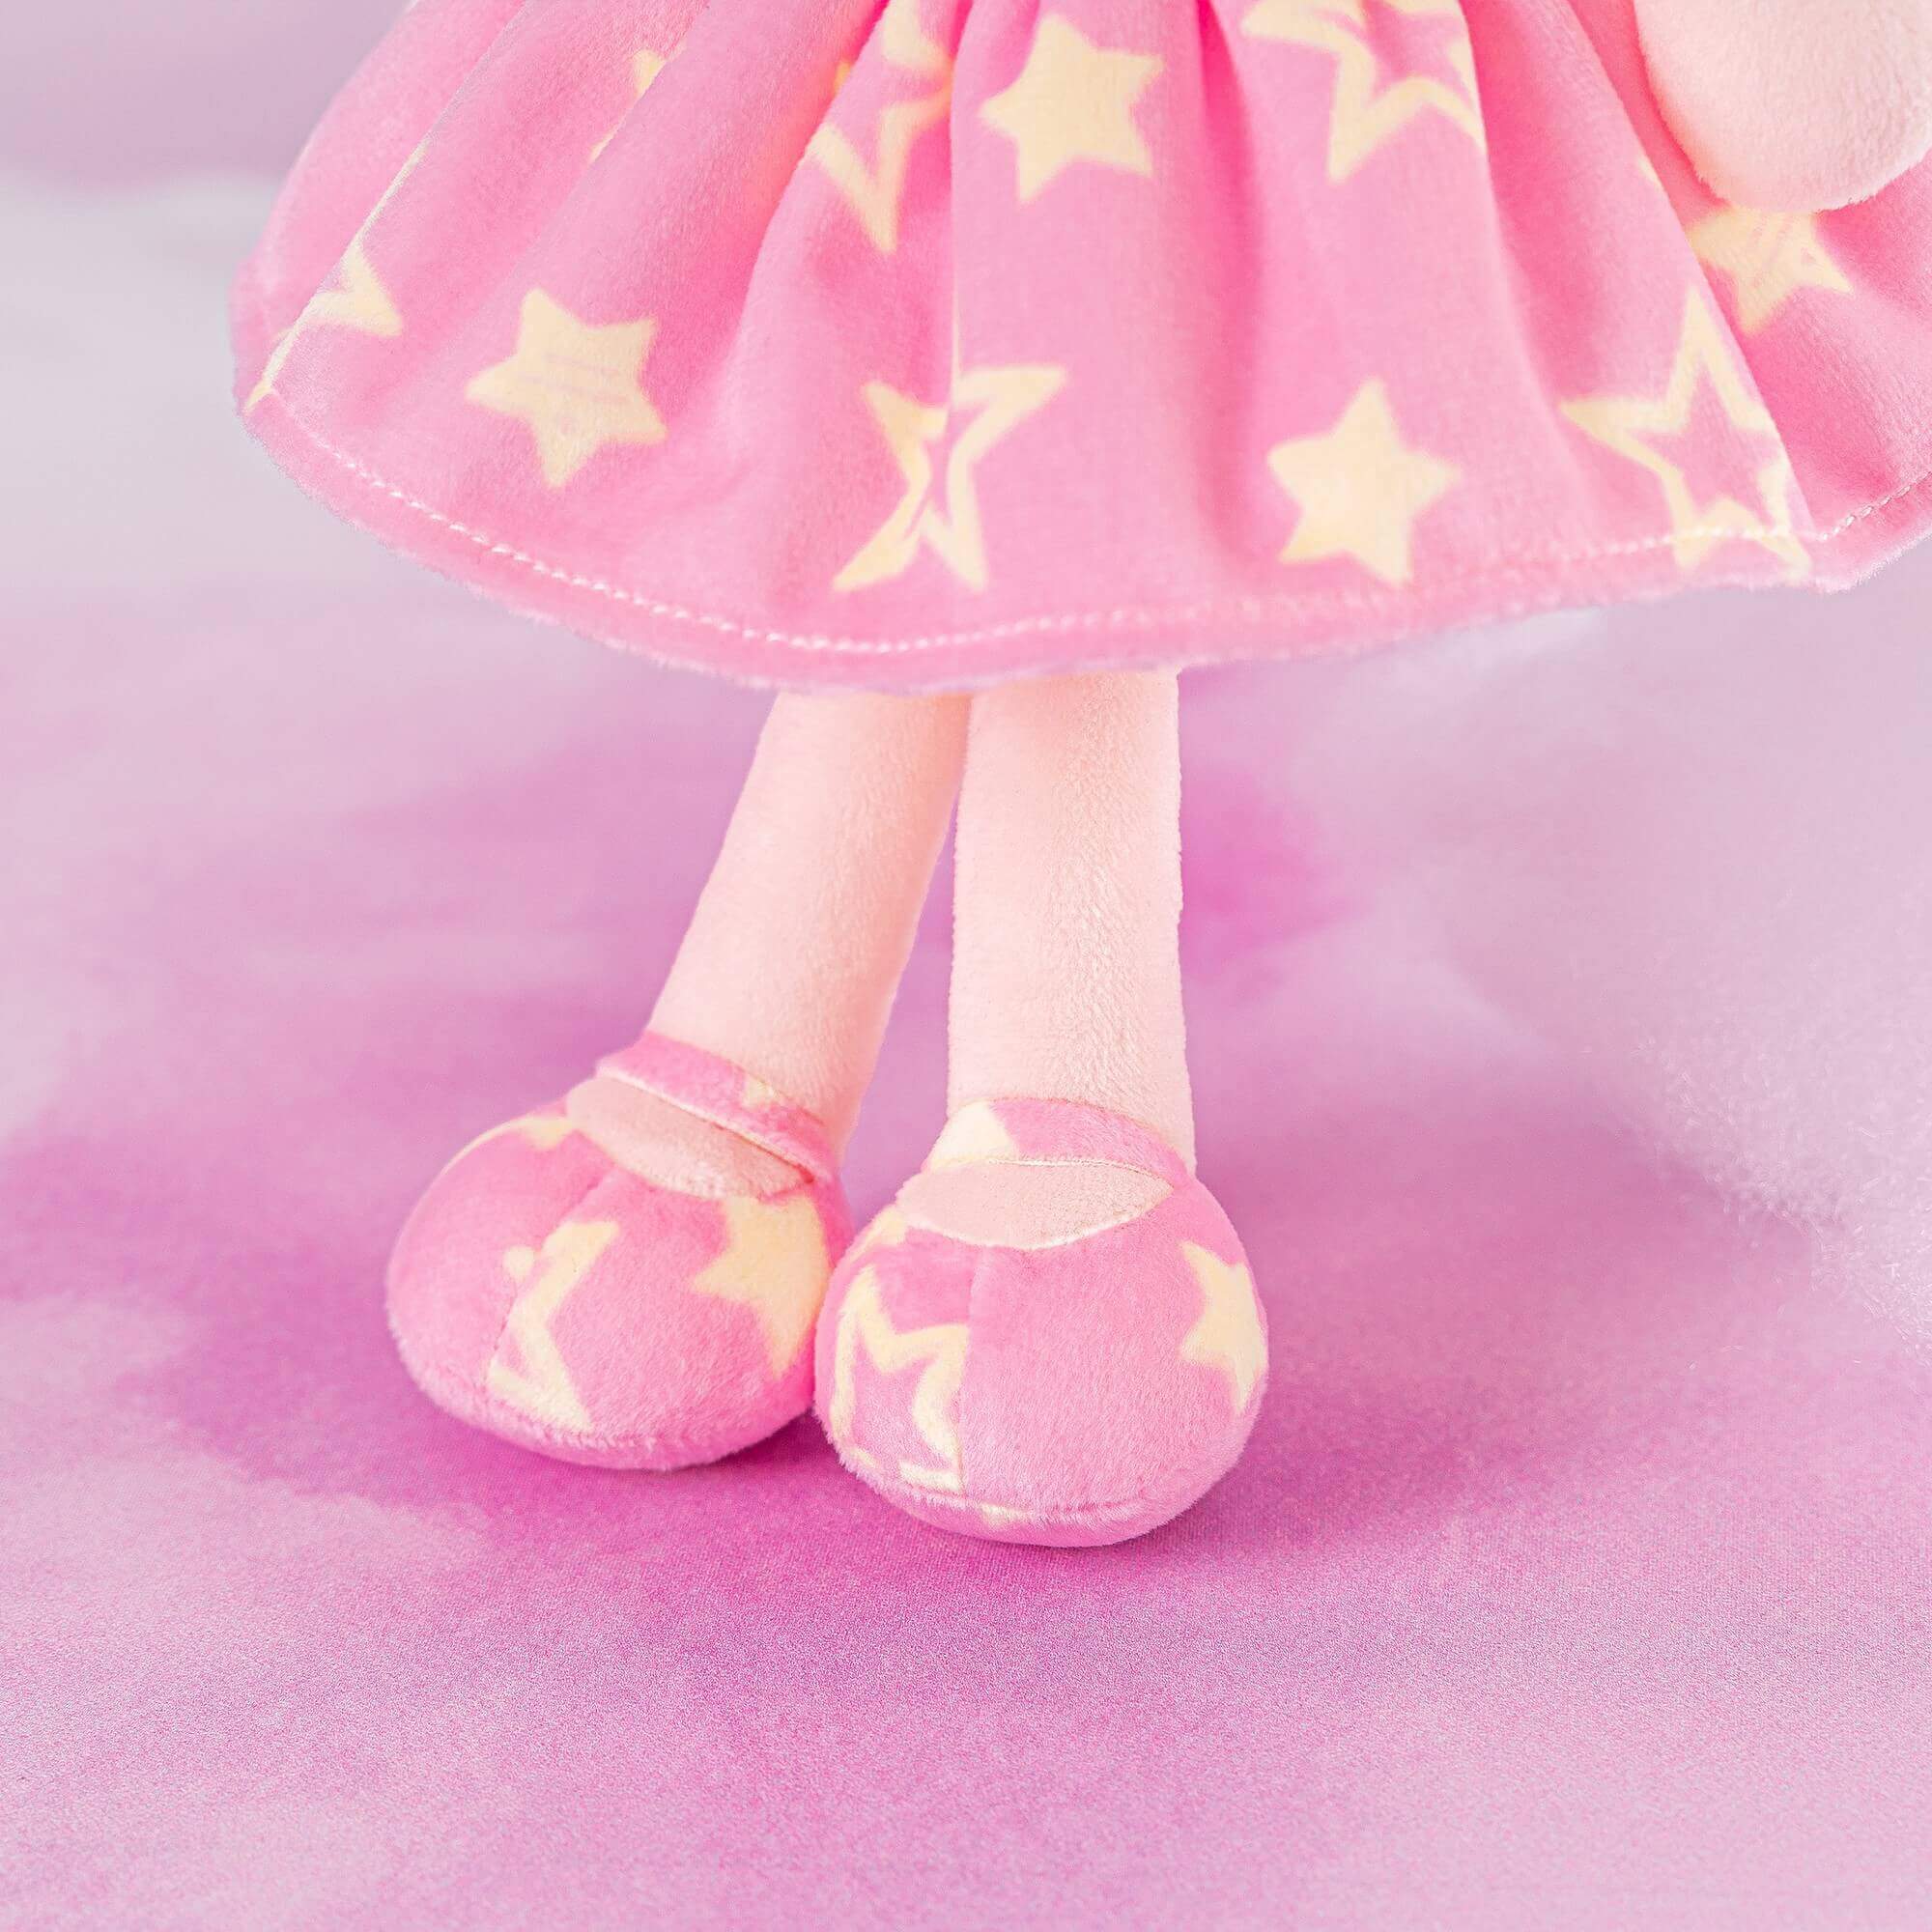 Gloveleya 12-inch Curly Hair Baby Star Dress Doll Series